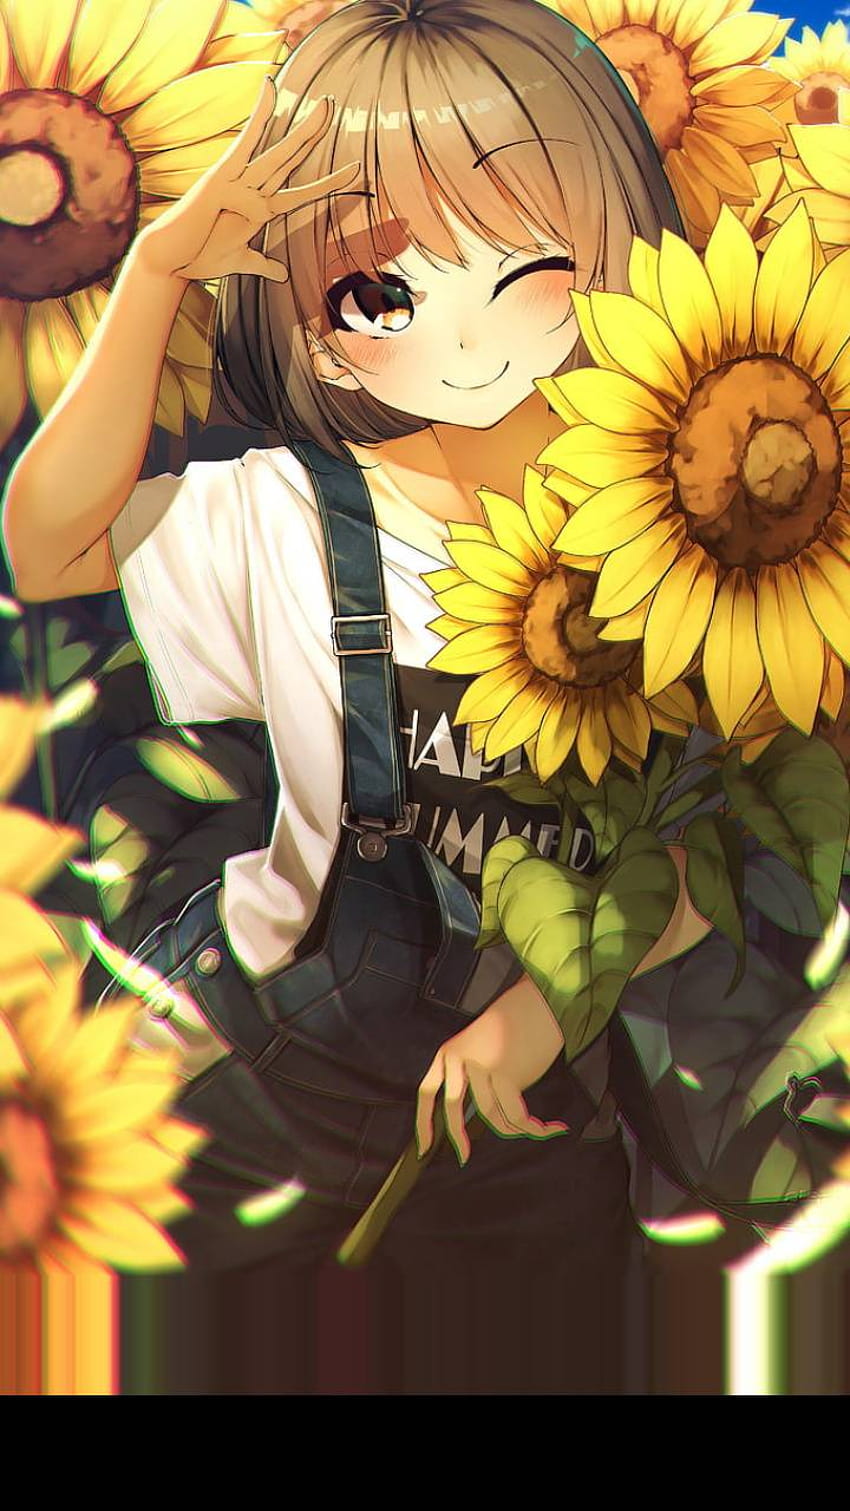 Kawaii Anime girl with sunflower and Braids